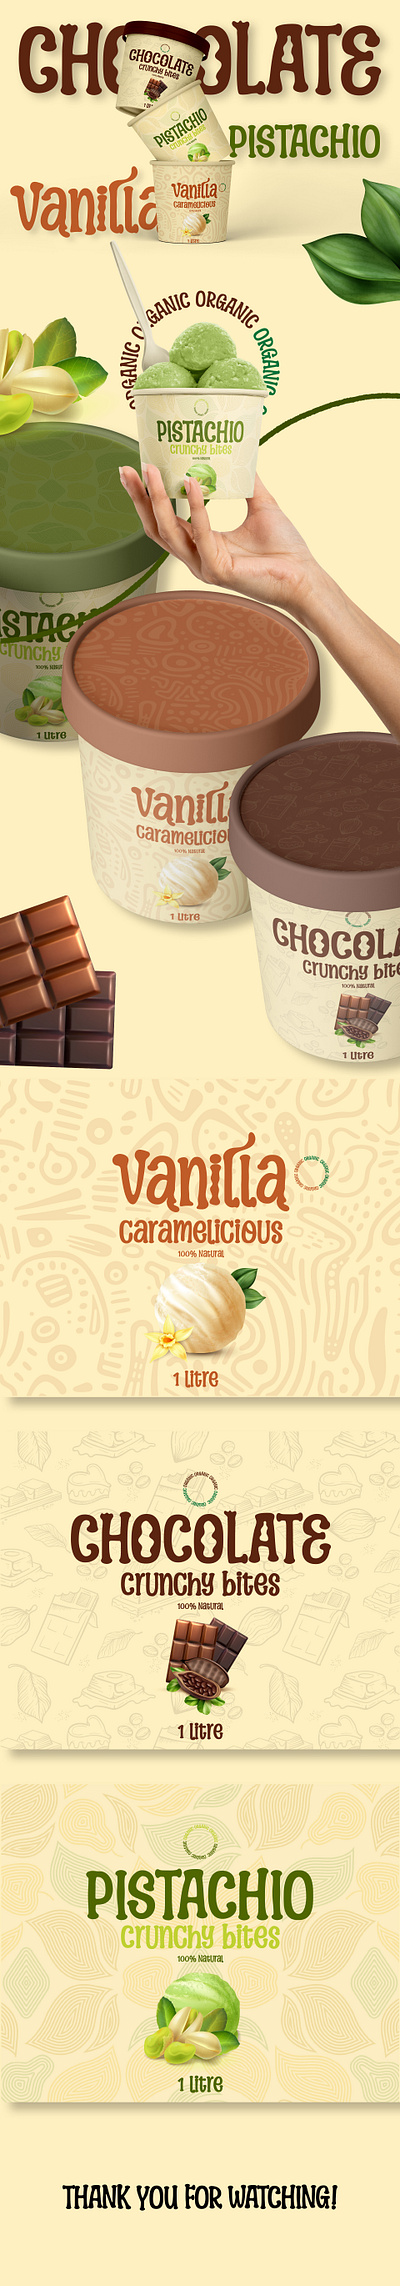 Ice Cream Cup - Label/ Packaging Design dessert